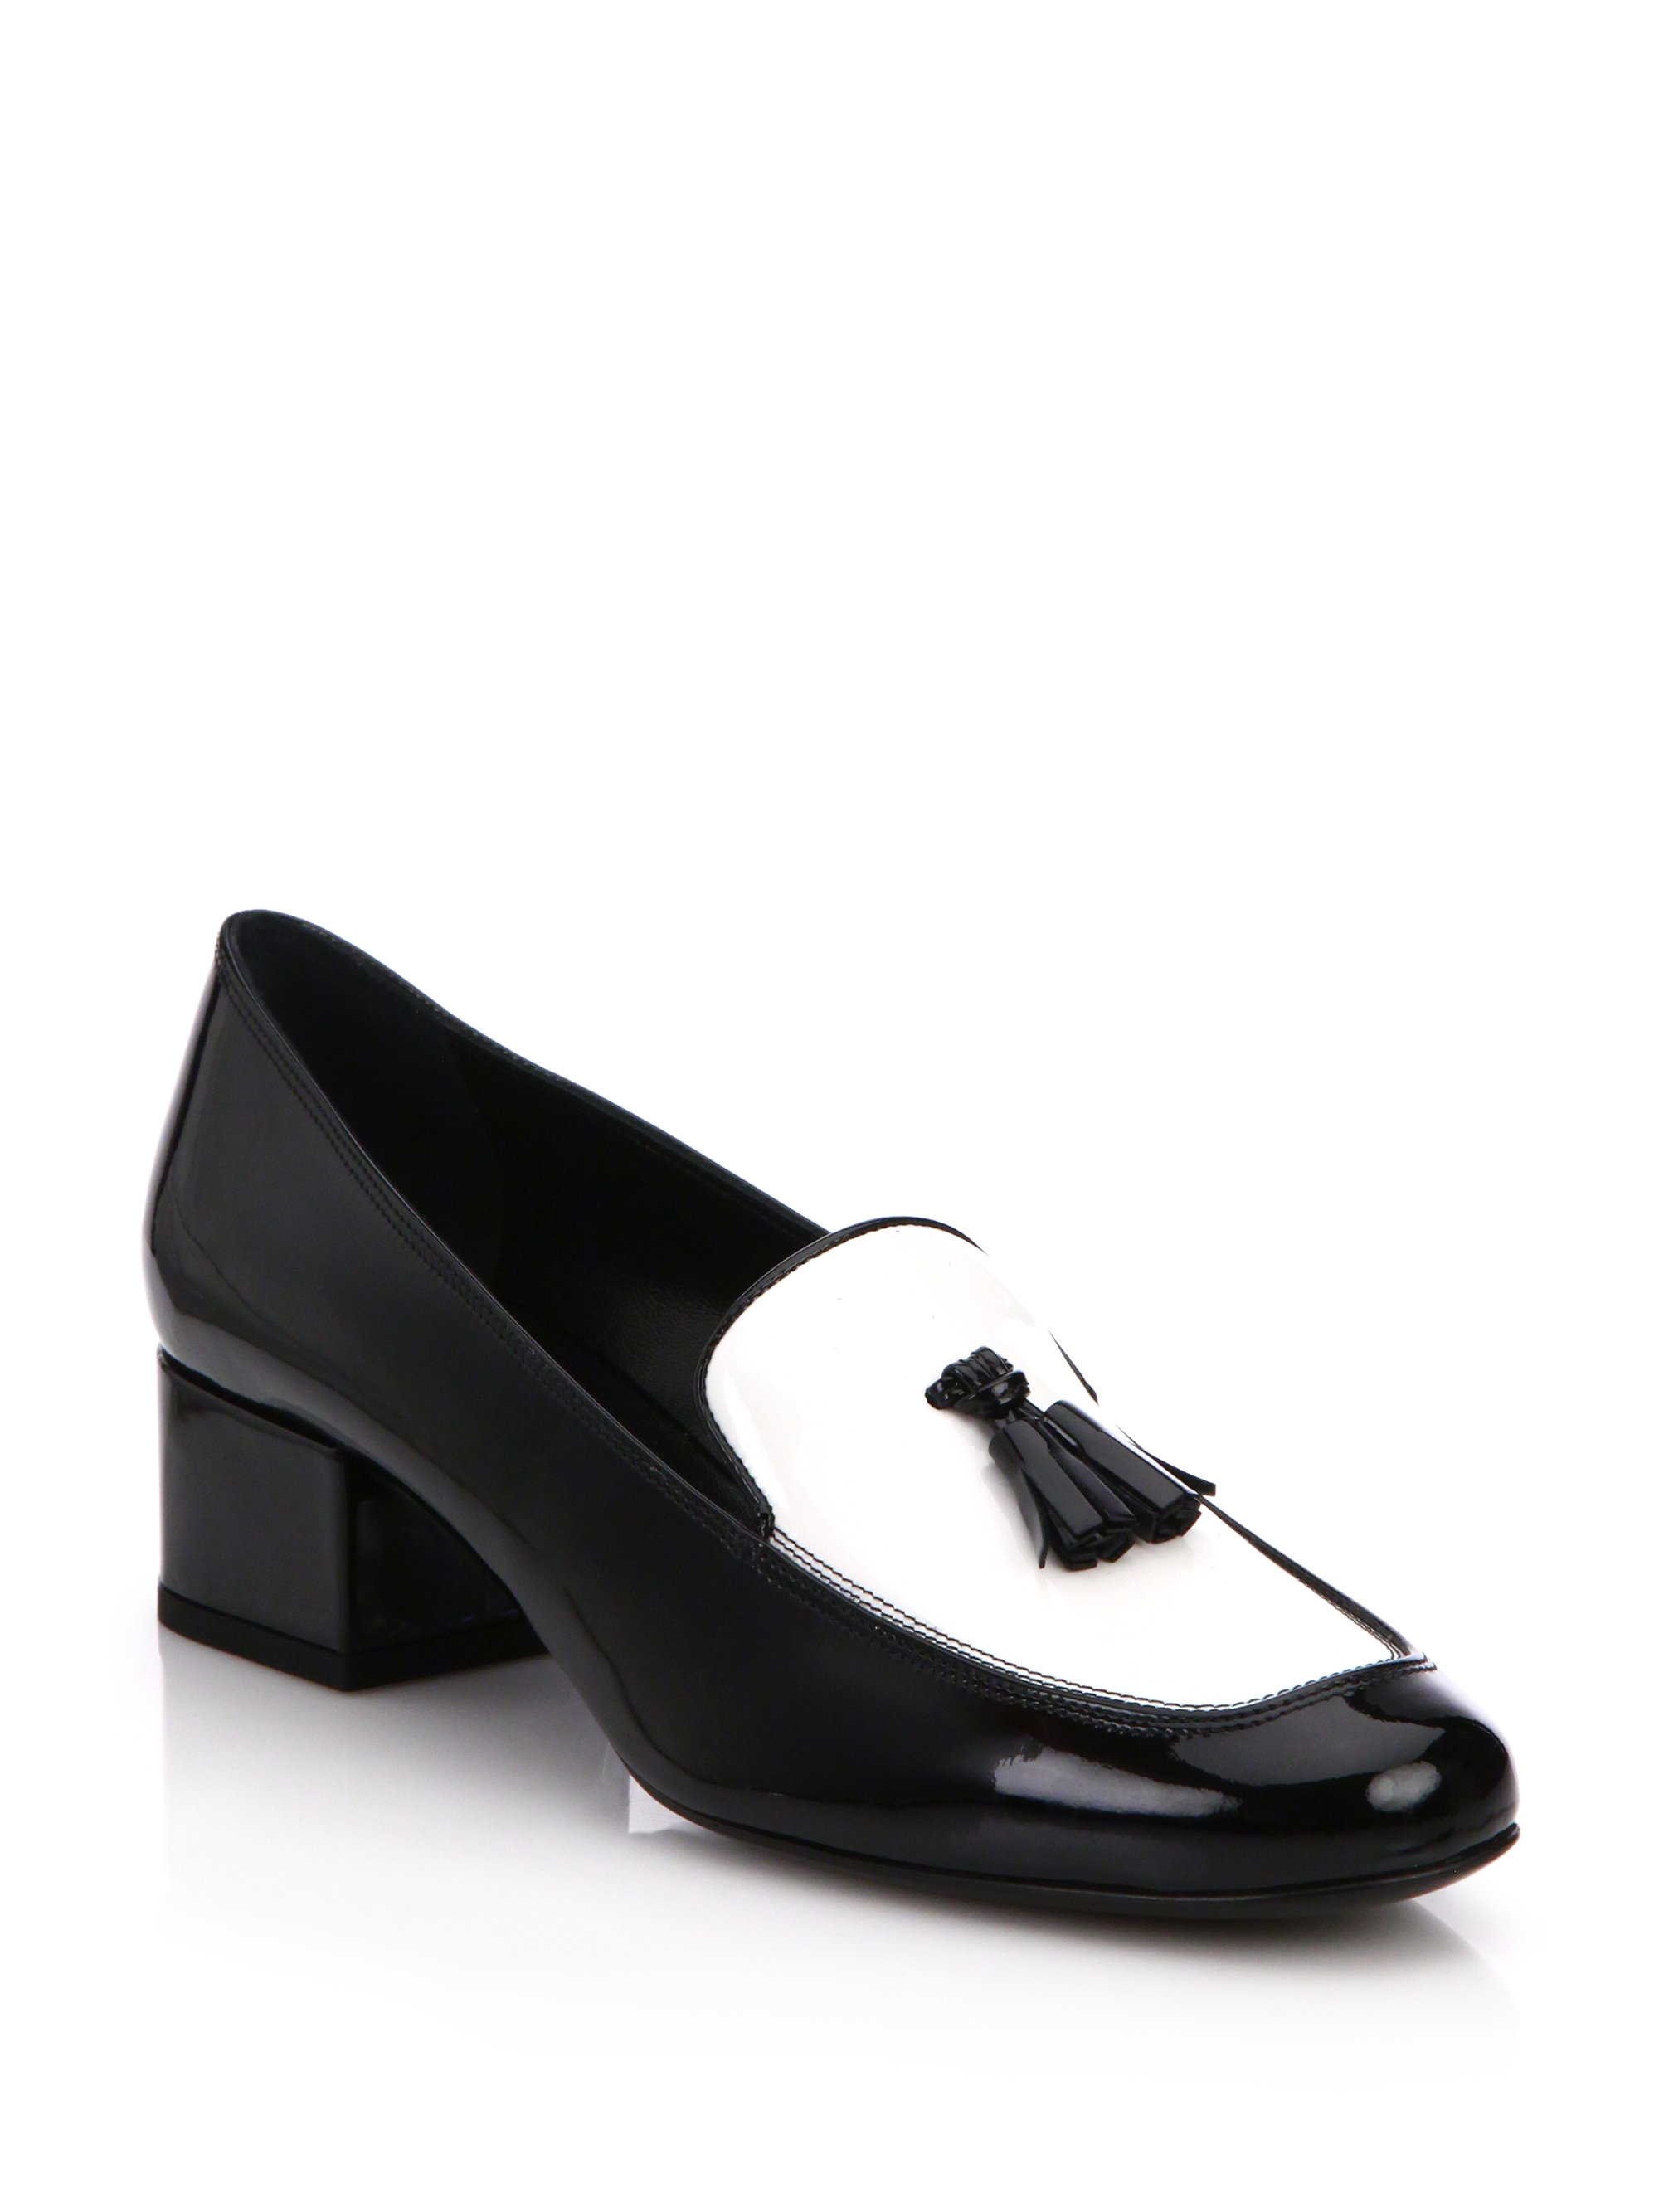 Saint Laurent Patent Tassel Loafers in Black-White (Black) - Lyst